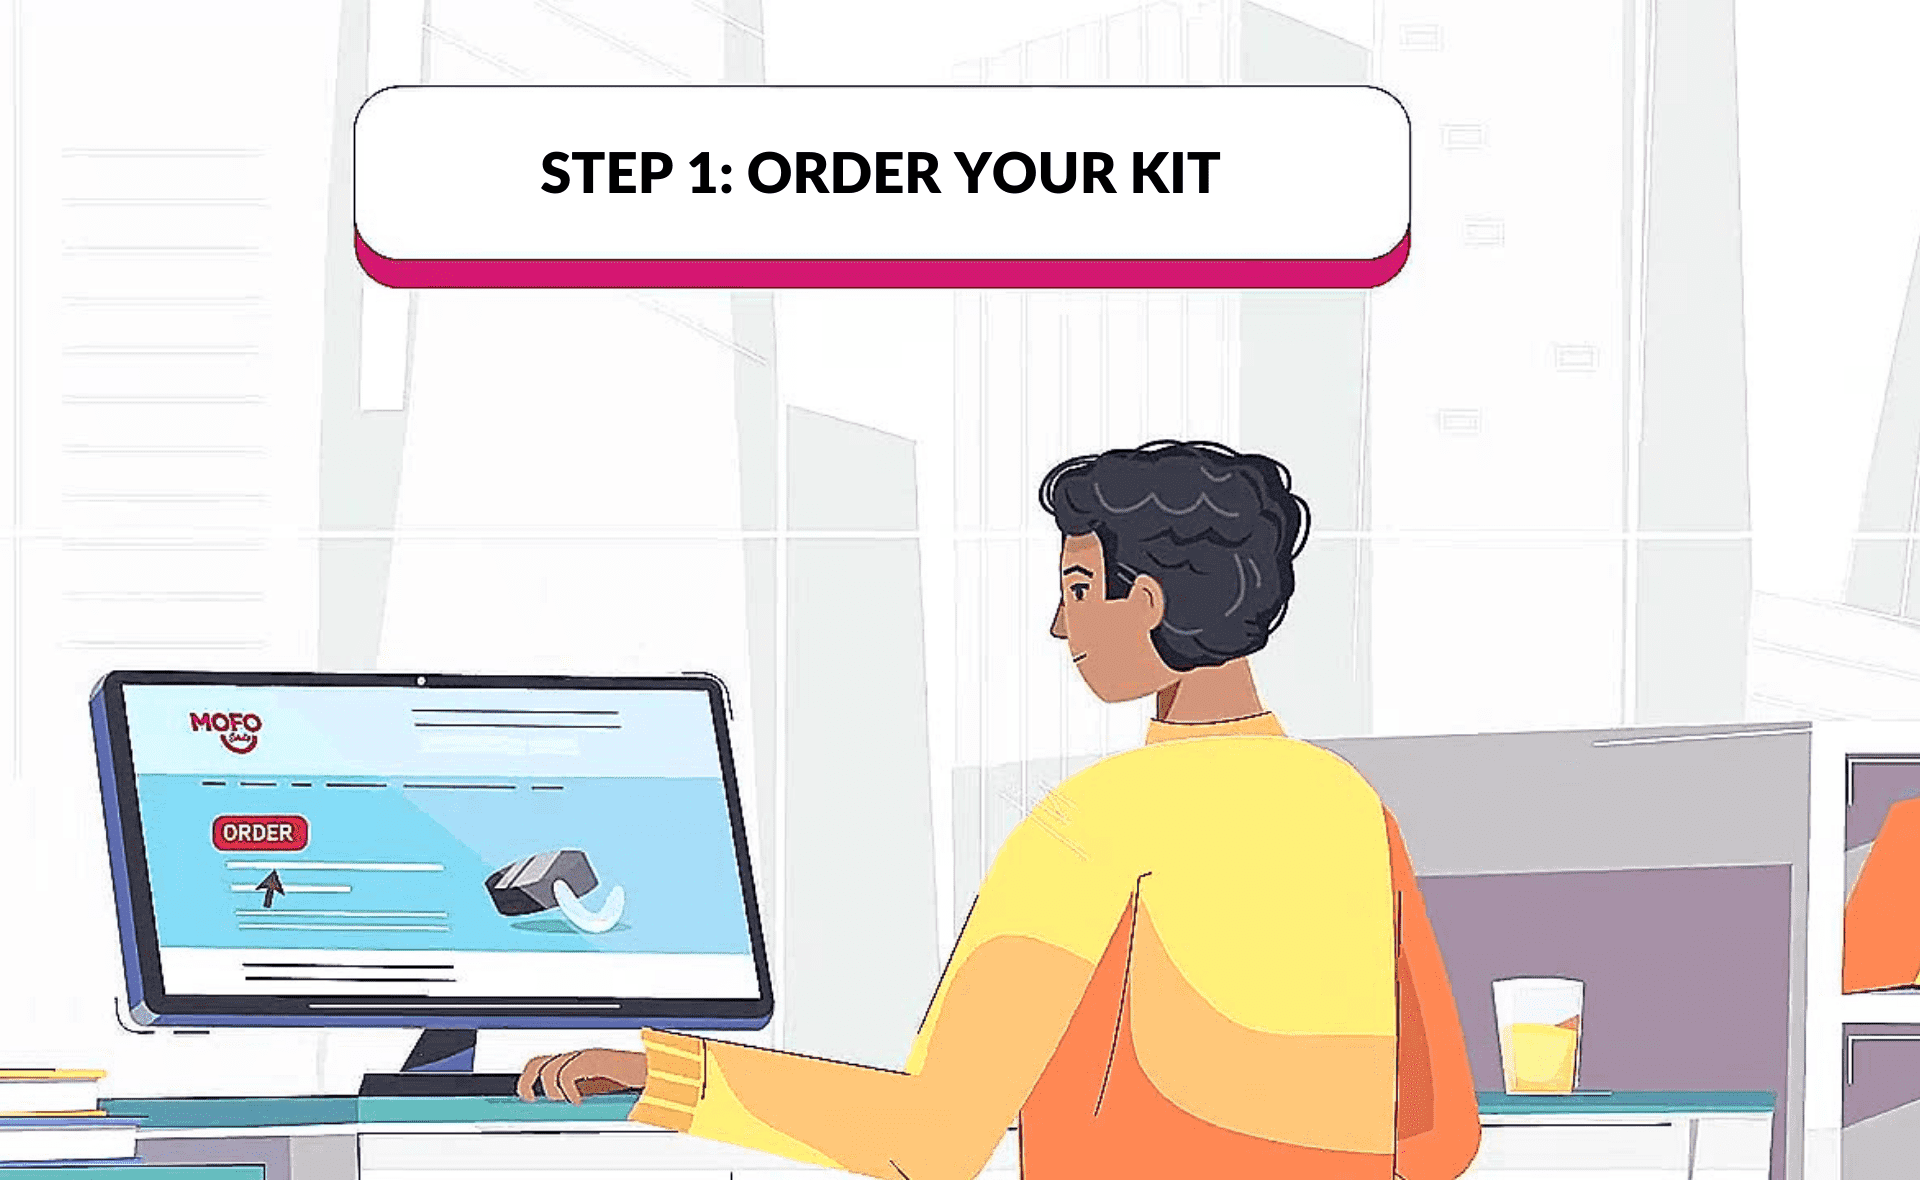 Step 1: Order your kit